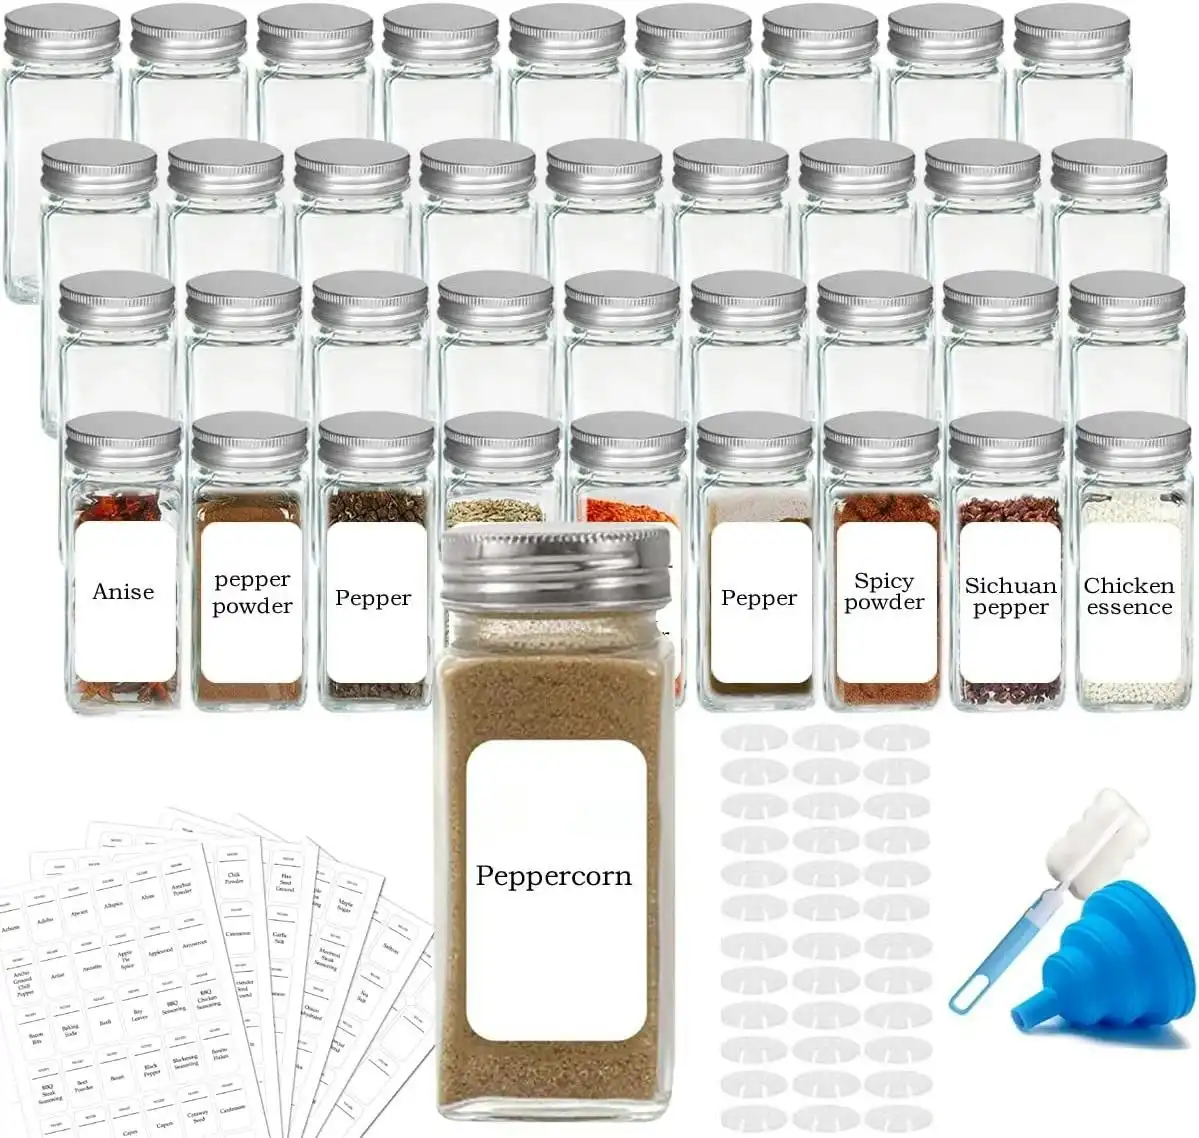 36 Pcs Glass Spice Jars Bottles with Spice Labels (120ml each bottle)